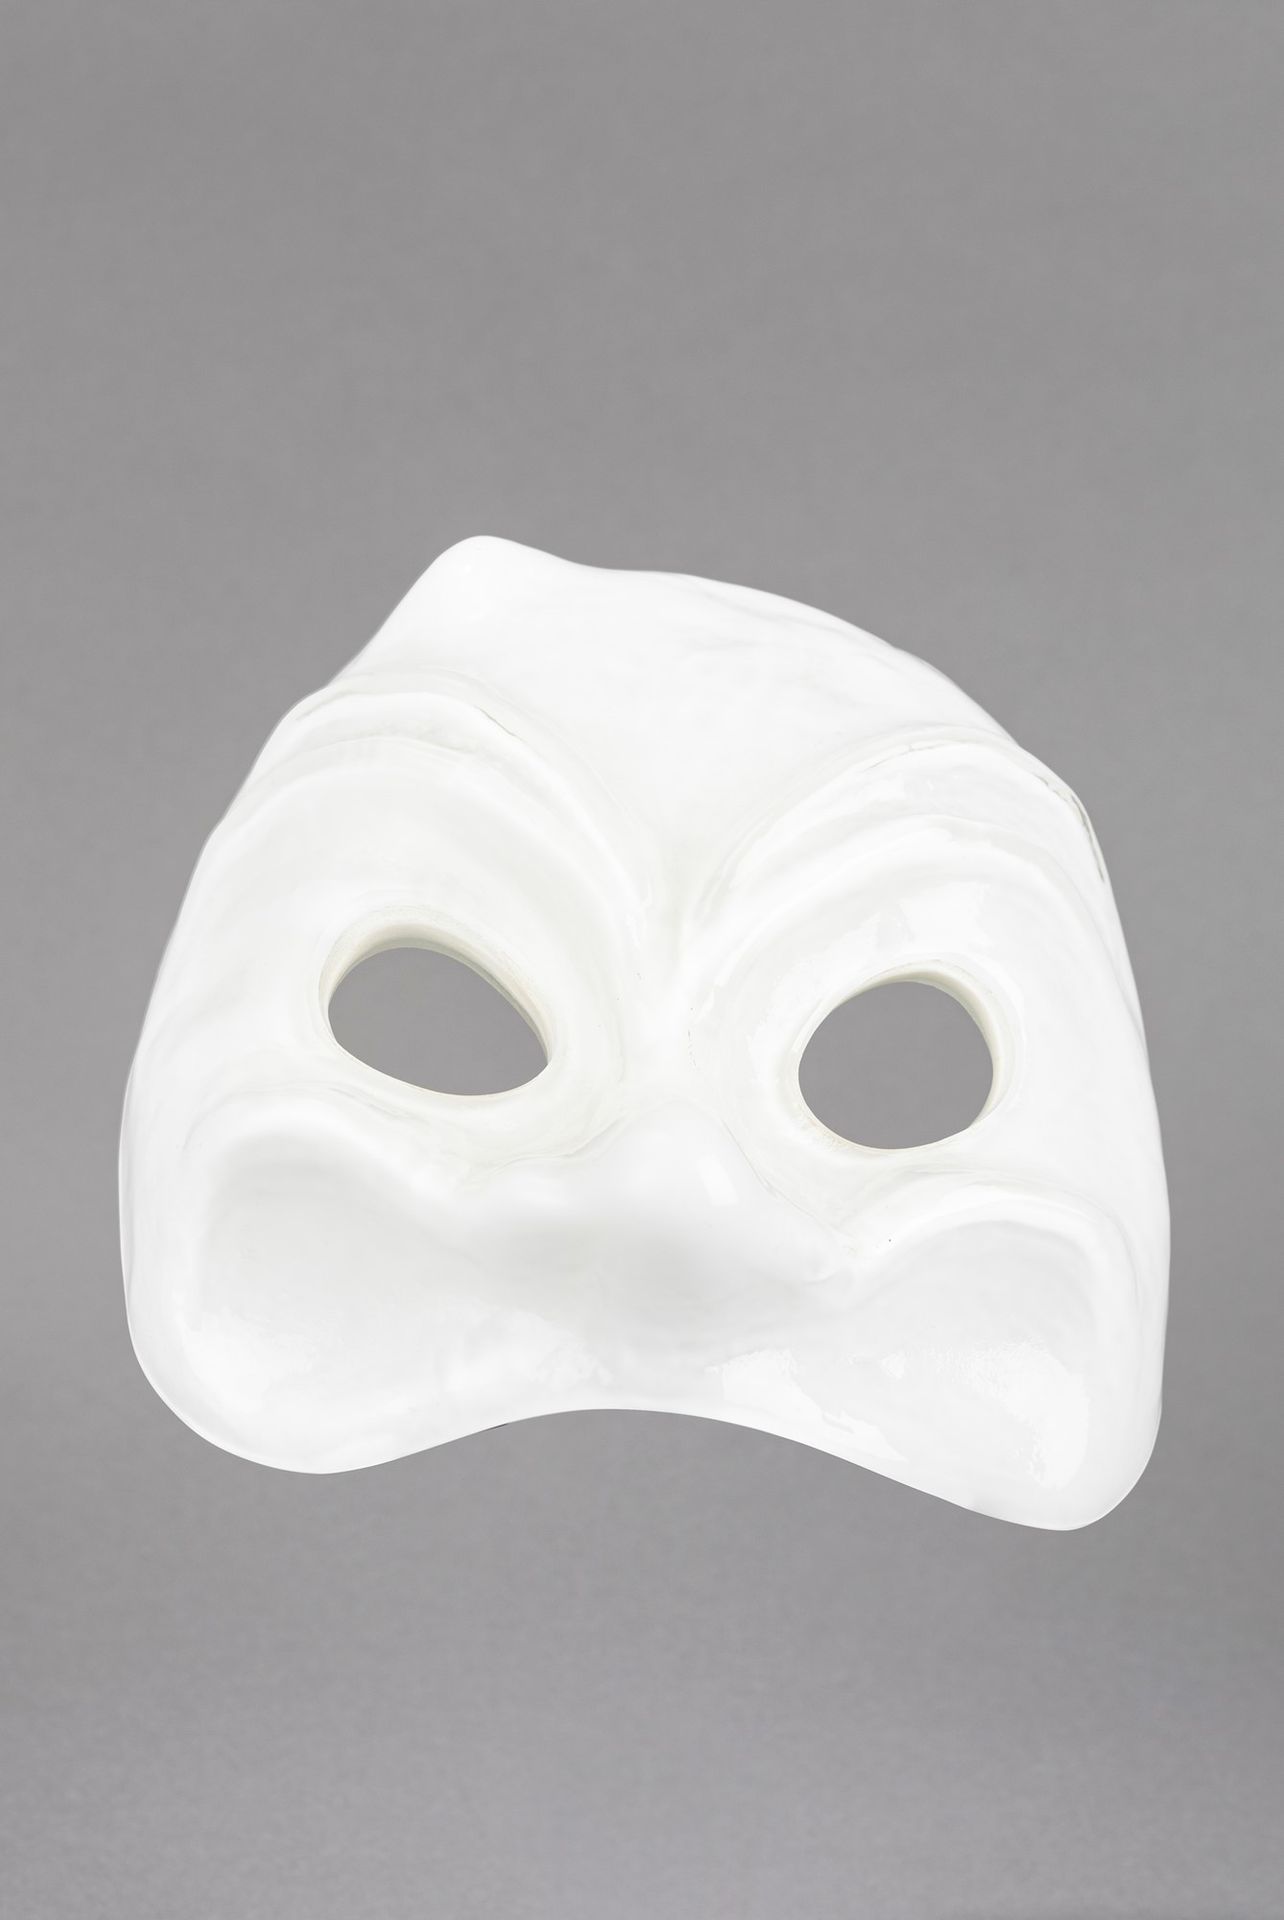 VENINI Masque, 1990

h 17 x 17 x 10 cm
incamiciato verre blanc opalin.

Étiquett&hellip;